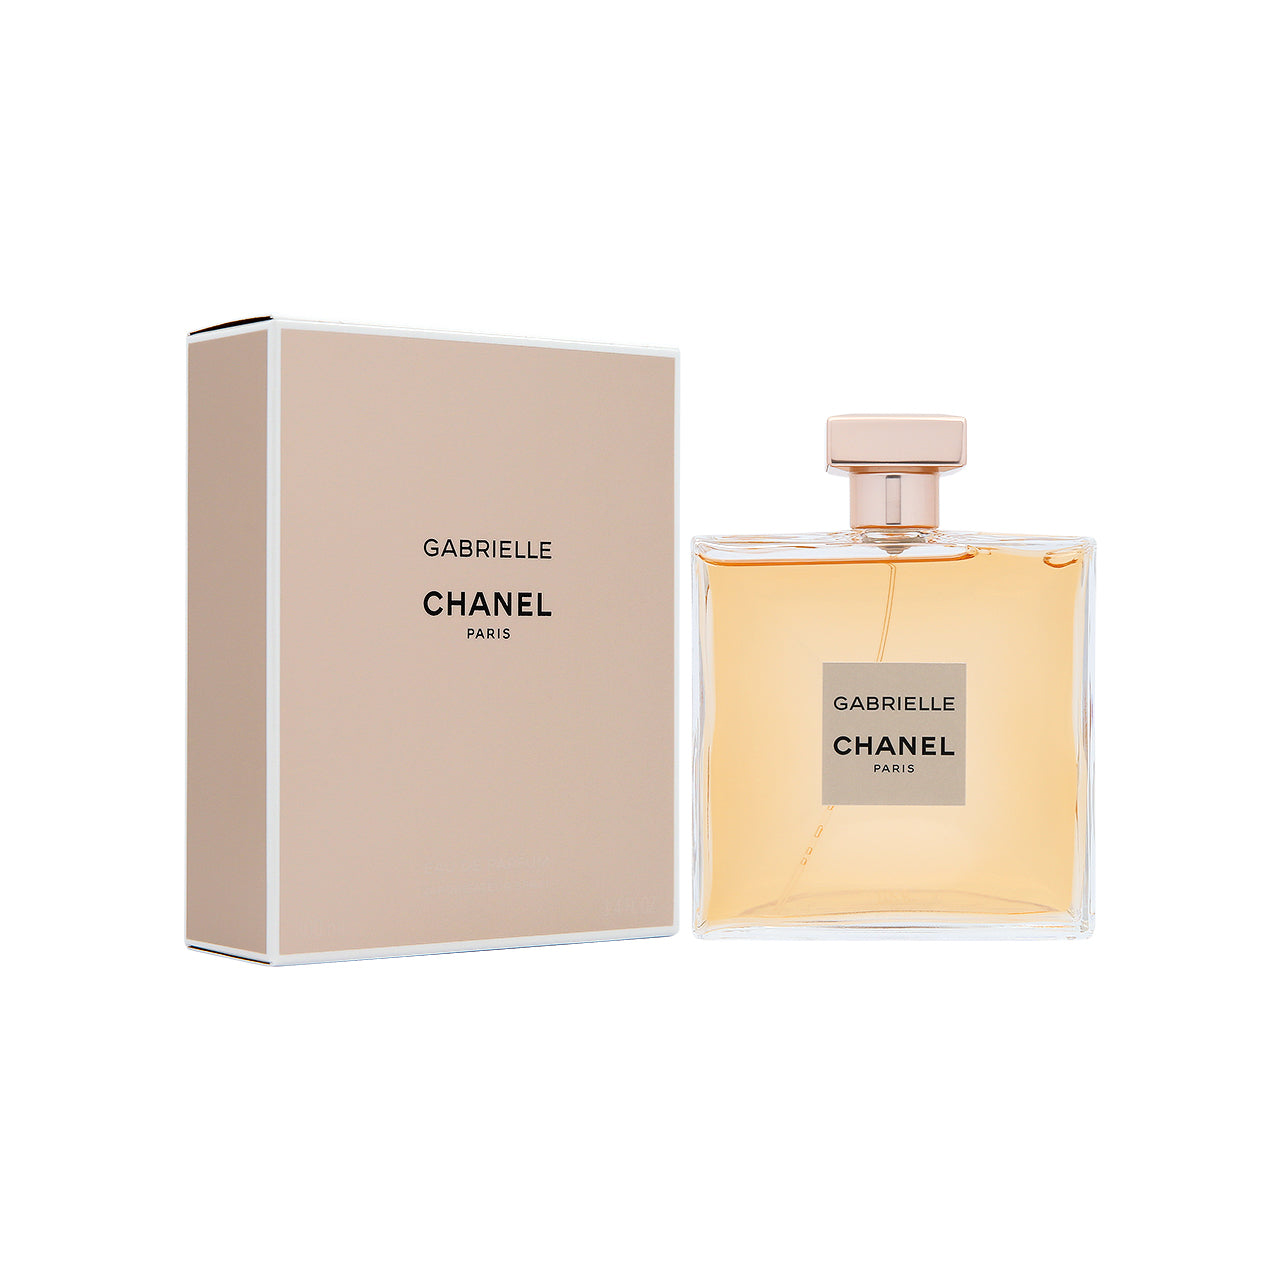 Chanel GABRIELLE CHANEL Eau de Parfum Spray 100ml | Sasa Global eShop